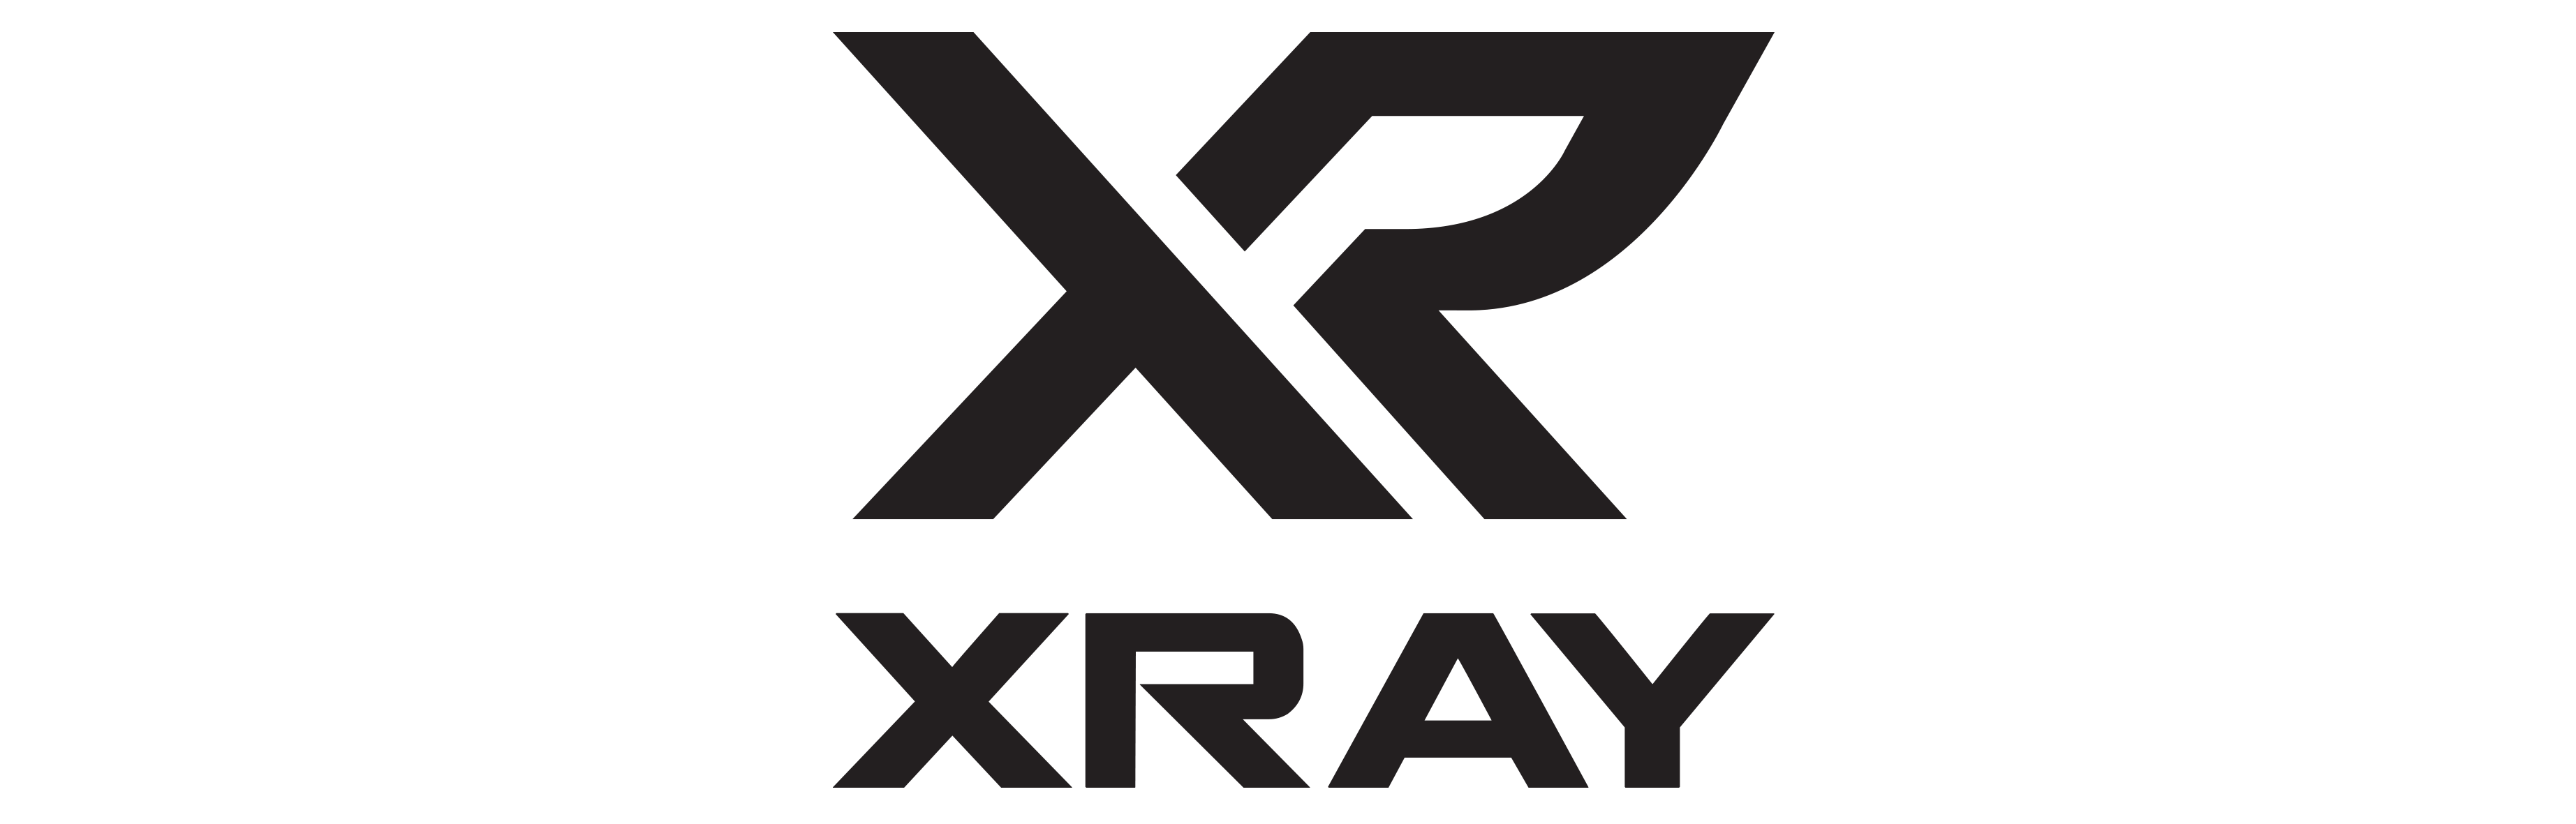 Xray Footwear_logo